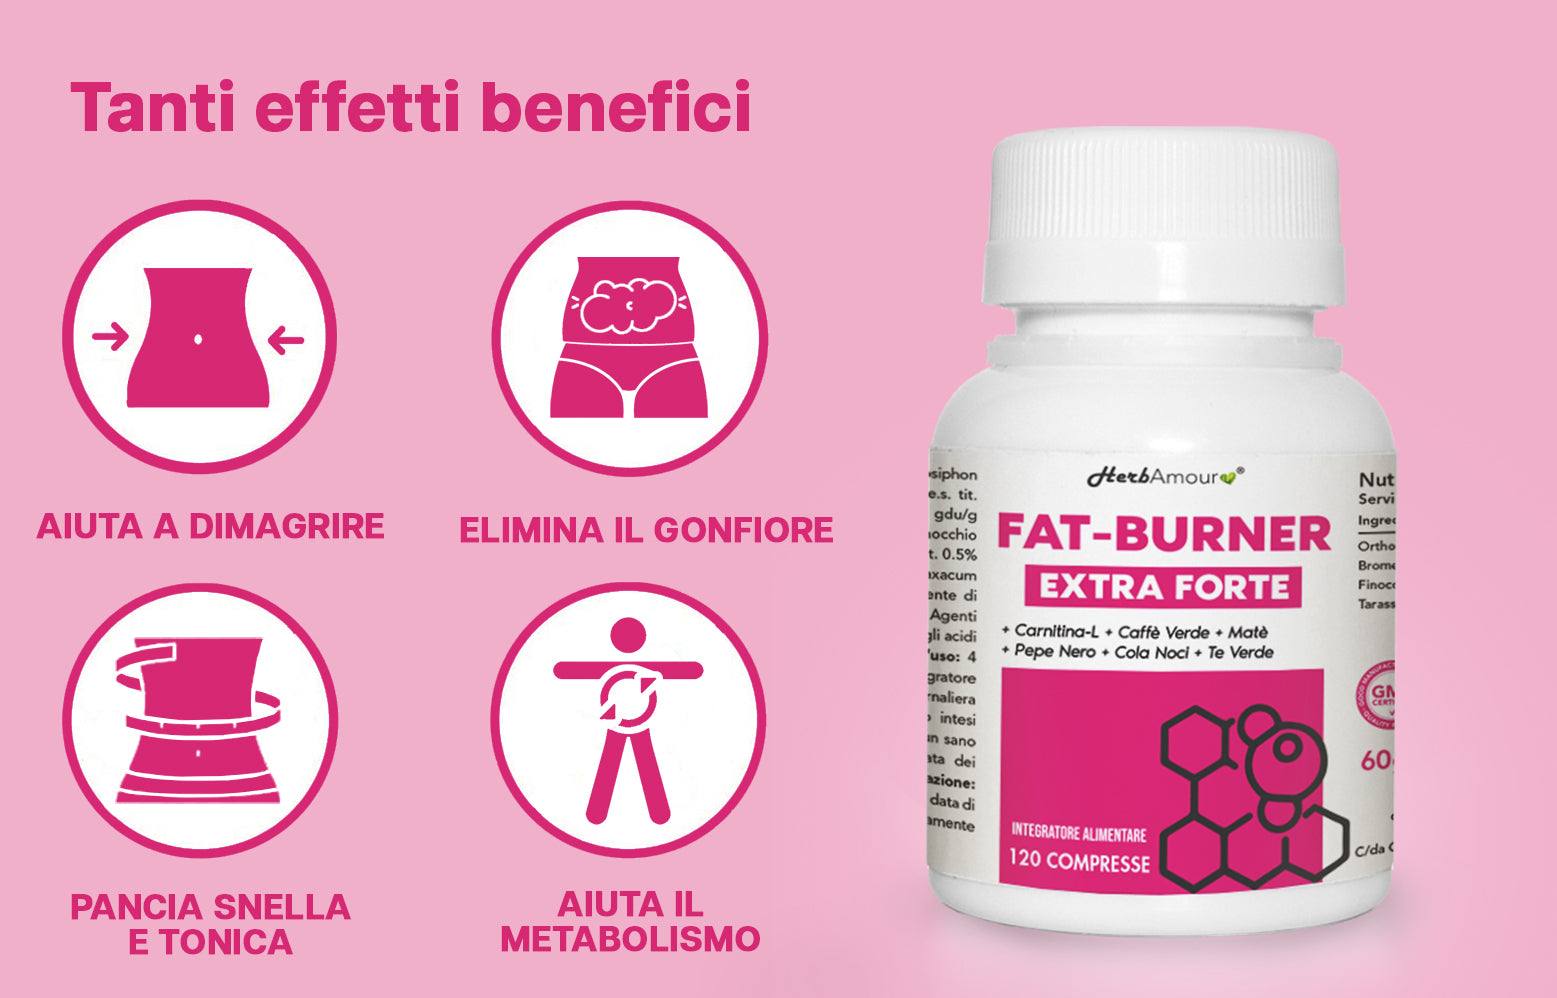 HerbAmour® Fat-Burner